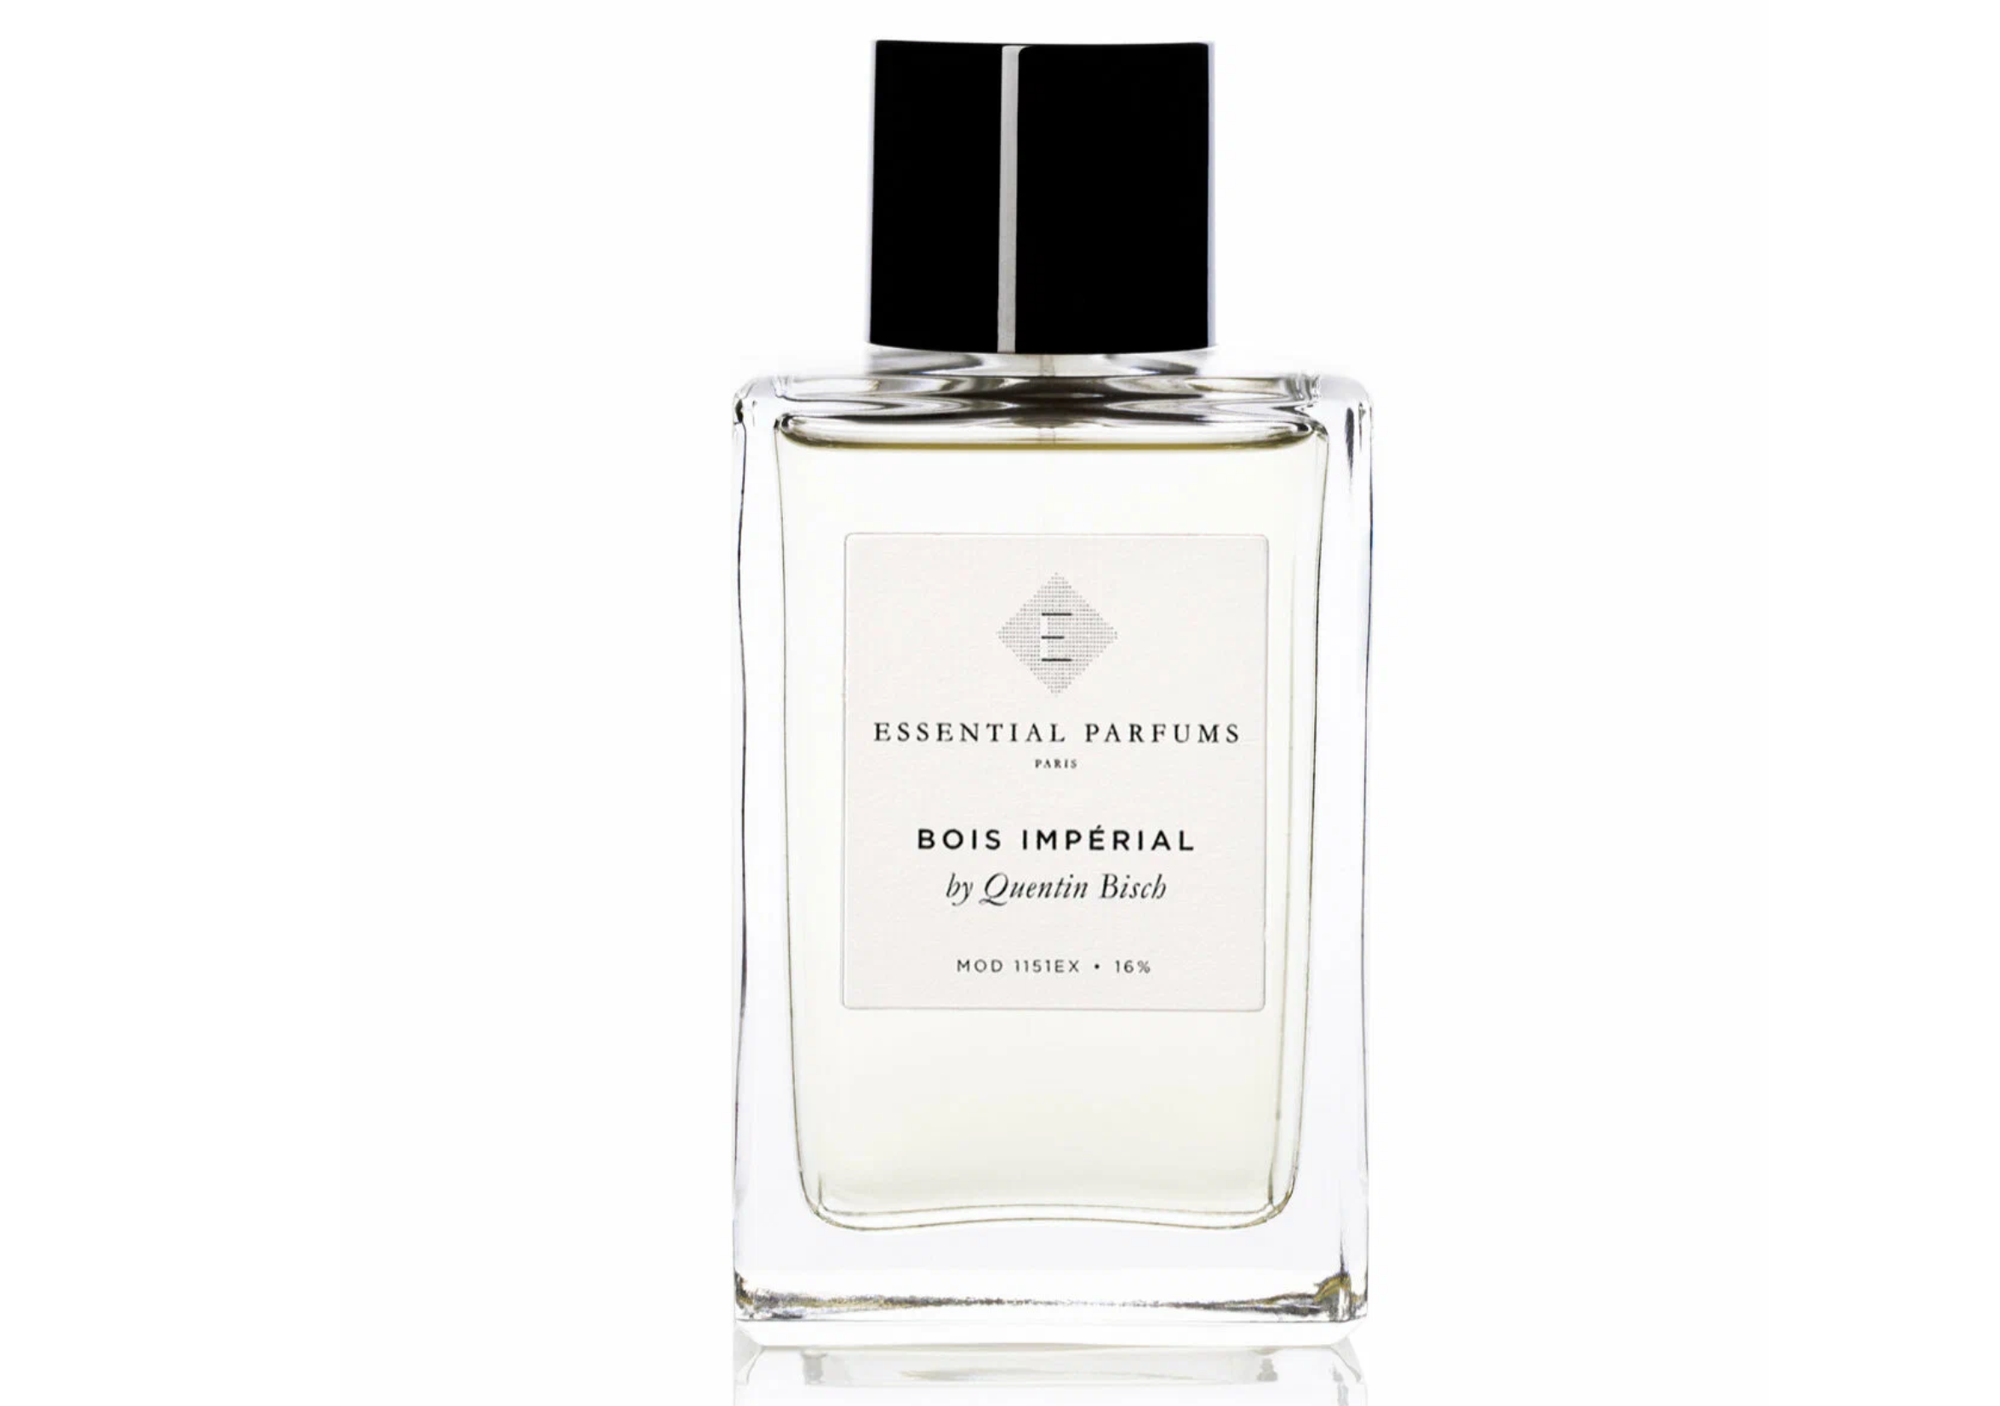 Essential Parfums парфюмерная вода Bois Imperial, 100 мл